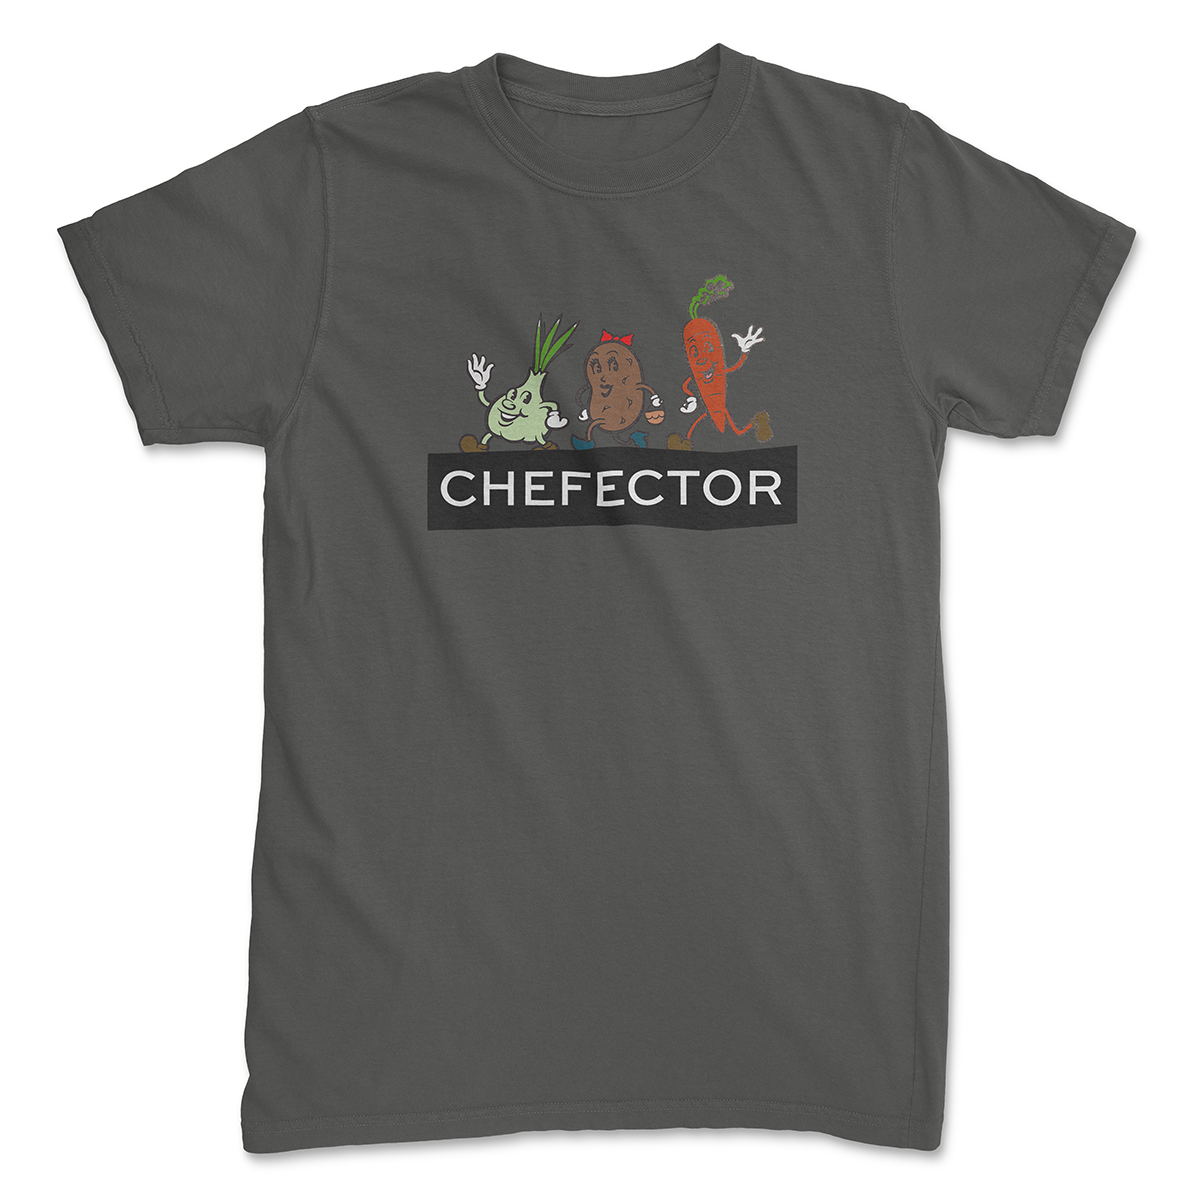 Chefector shirt with CHEFECTOR logo and three veggies dancing